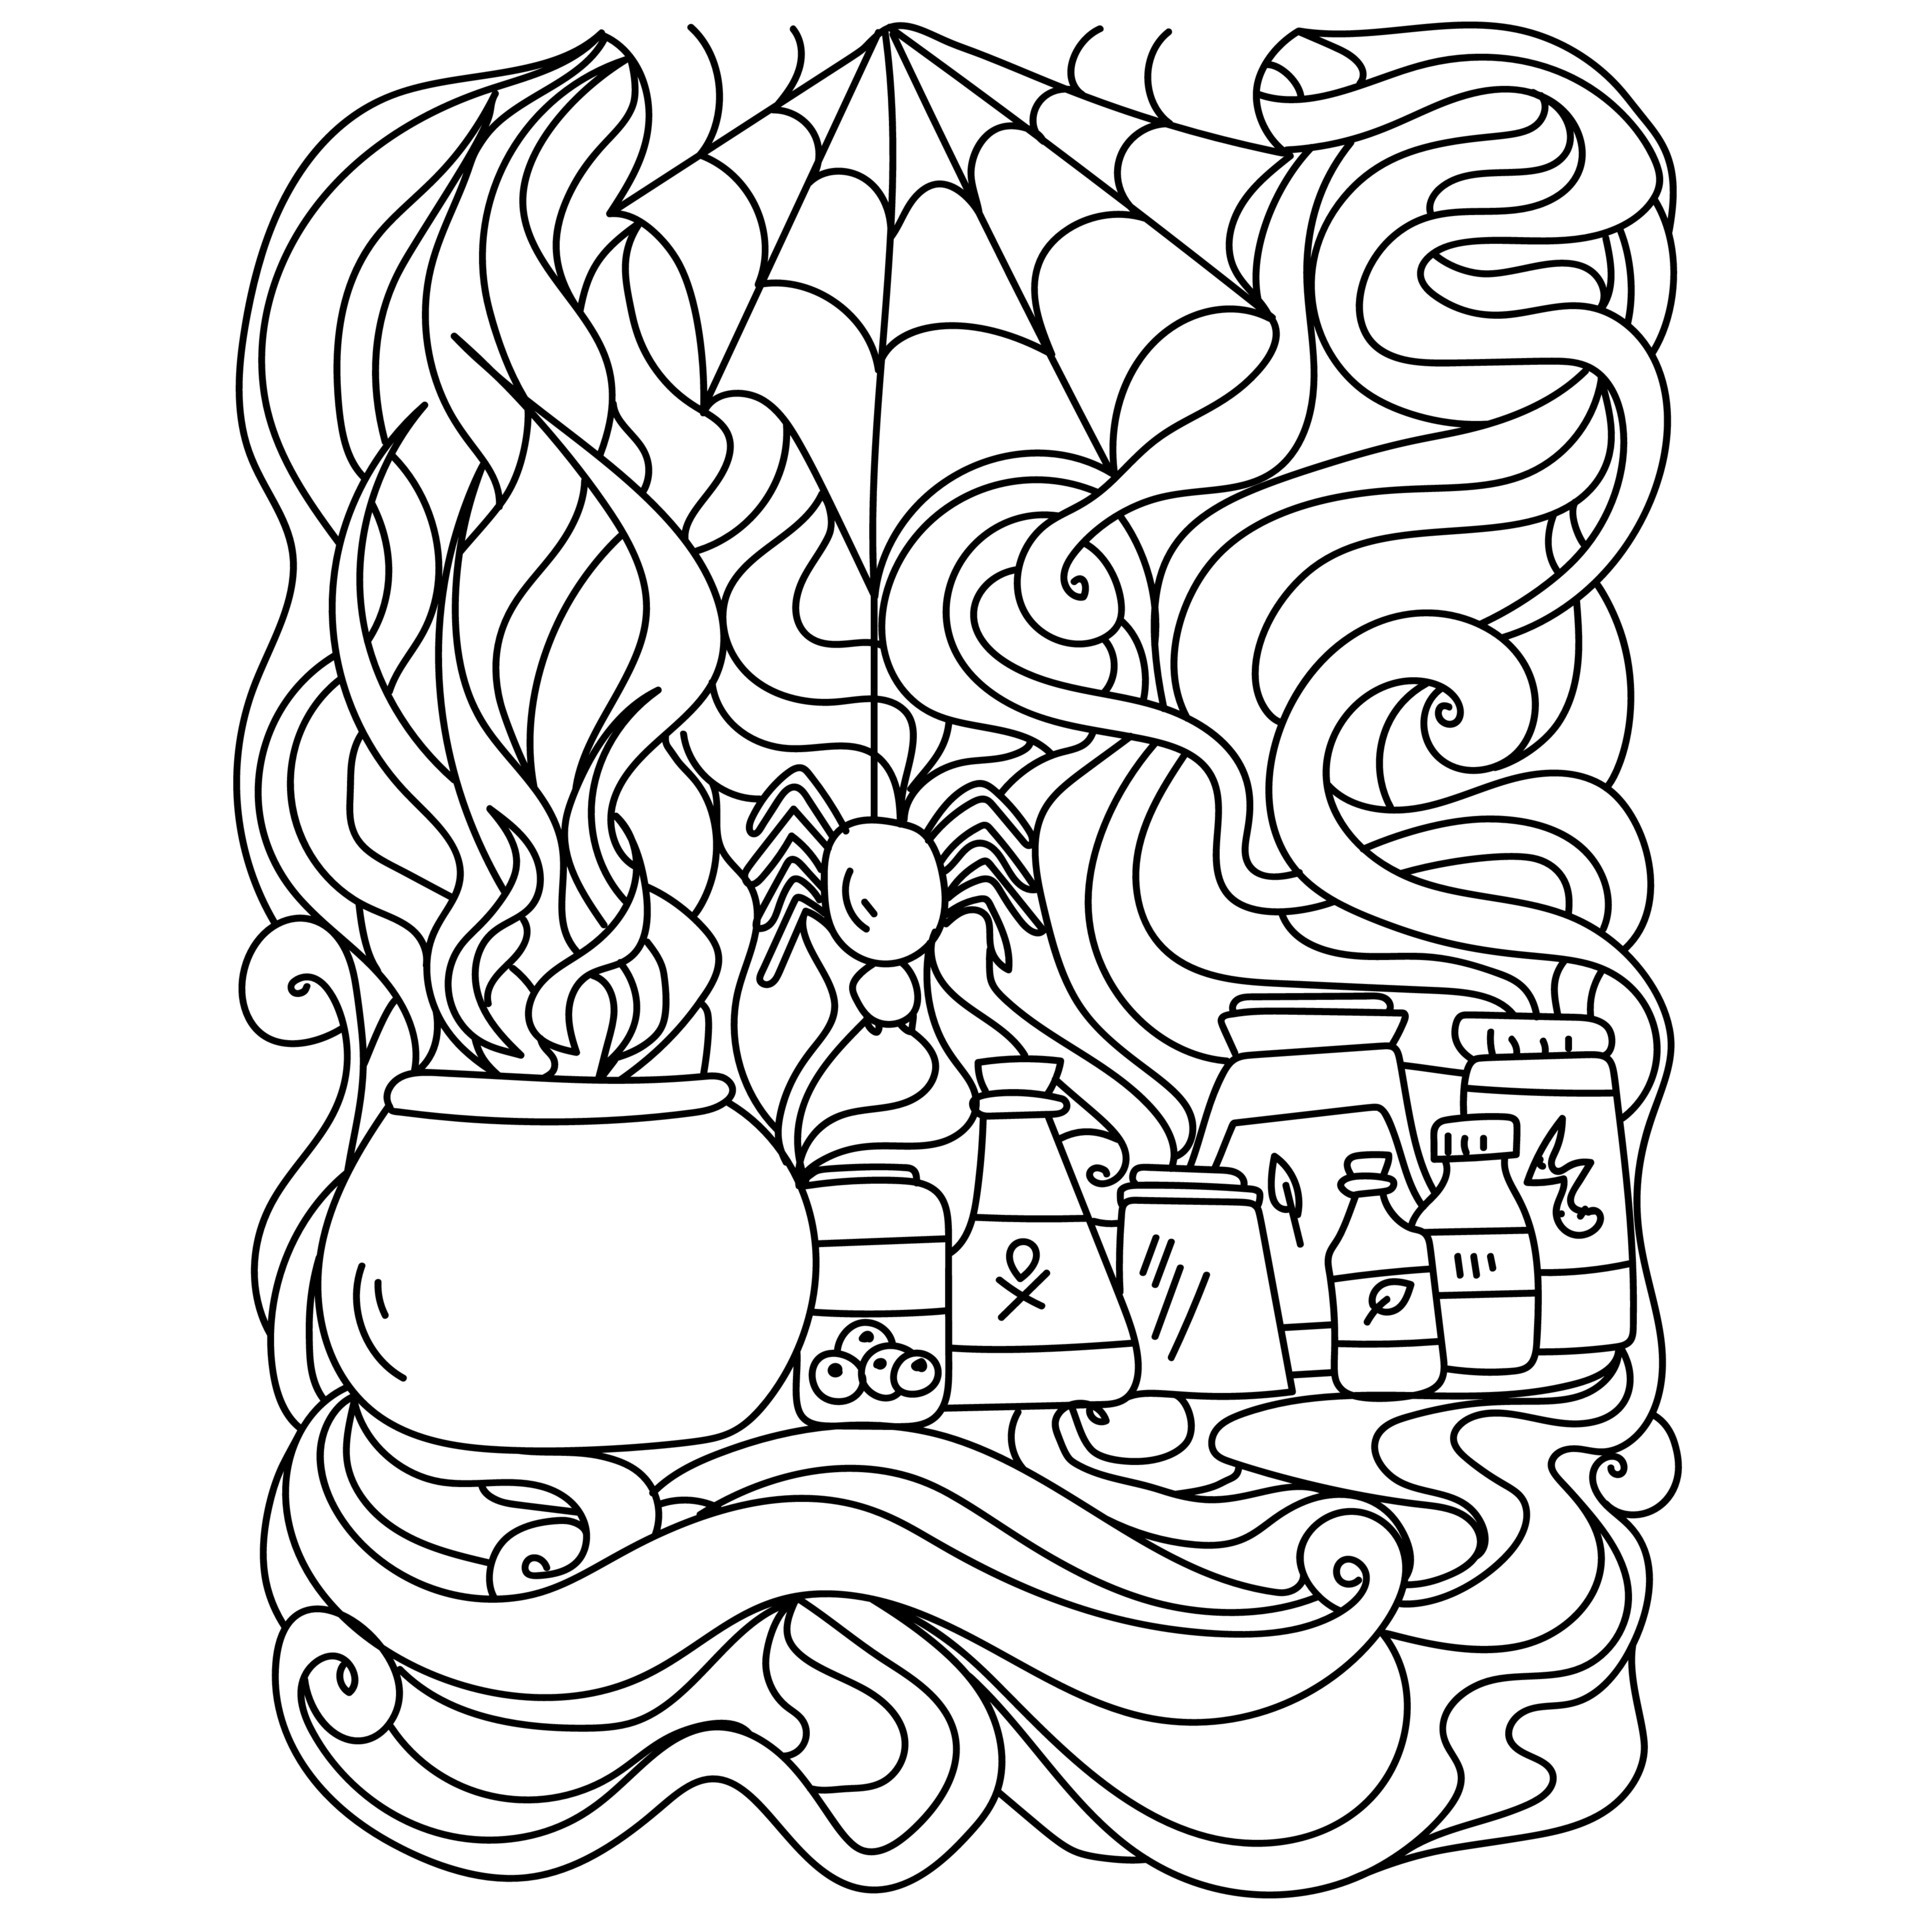 Halloween coloring page, meditative patterns, cauldron and magic potions  6899483 Vector Art at Vecteezy